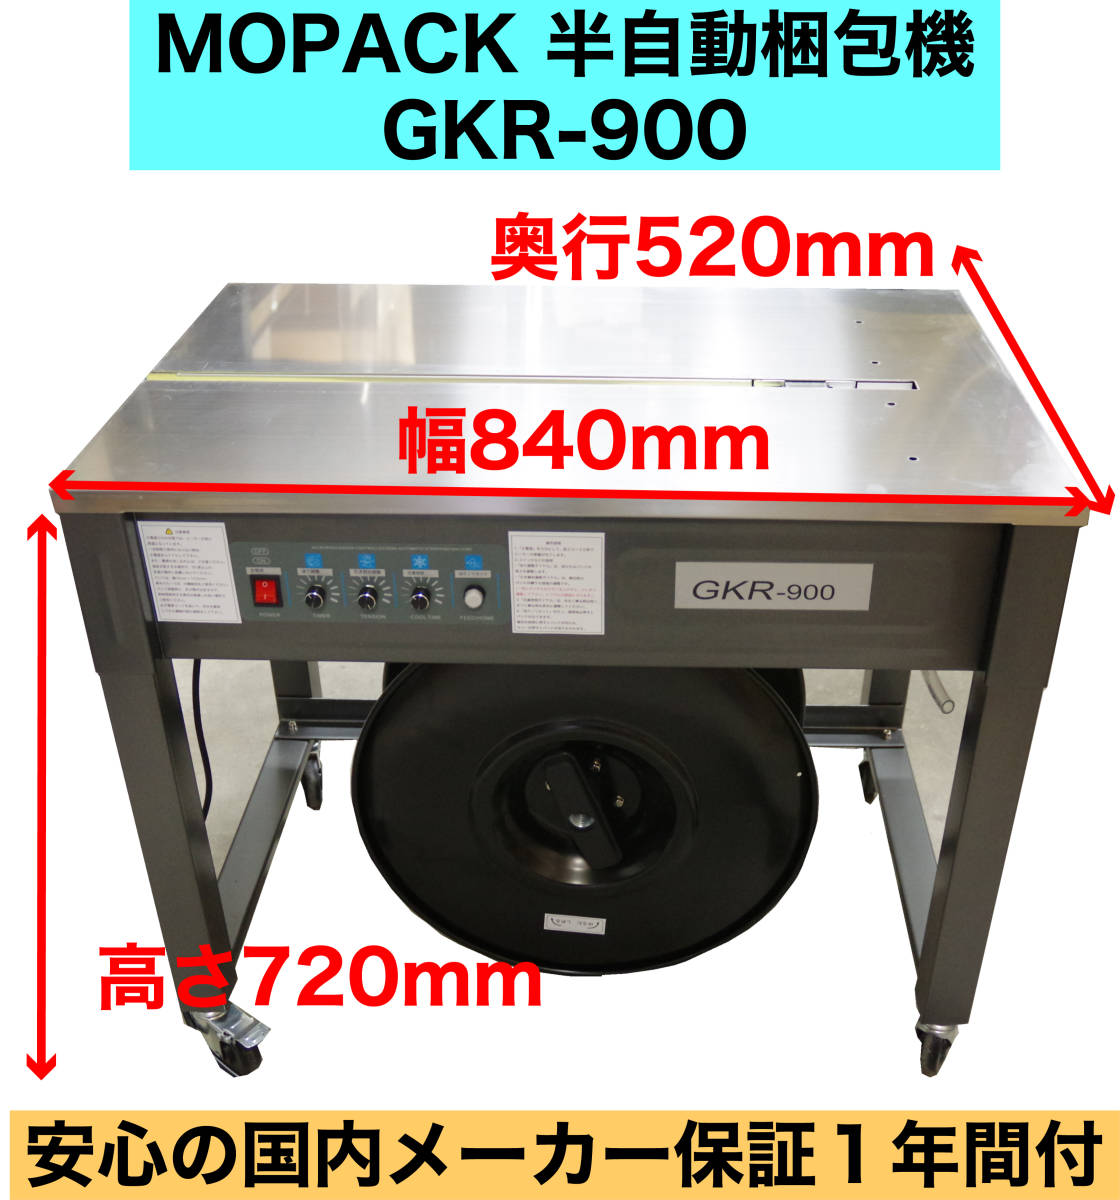 MOPACK 半自動梱包機 PPバンド結束機 1年間国内メーカー保証付き 新品 GKR-900 株式会社グランテクノ 中古より安心